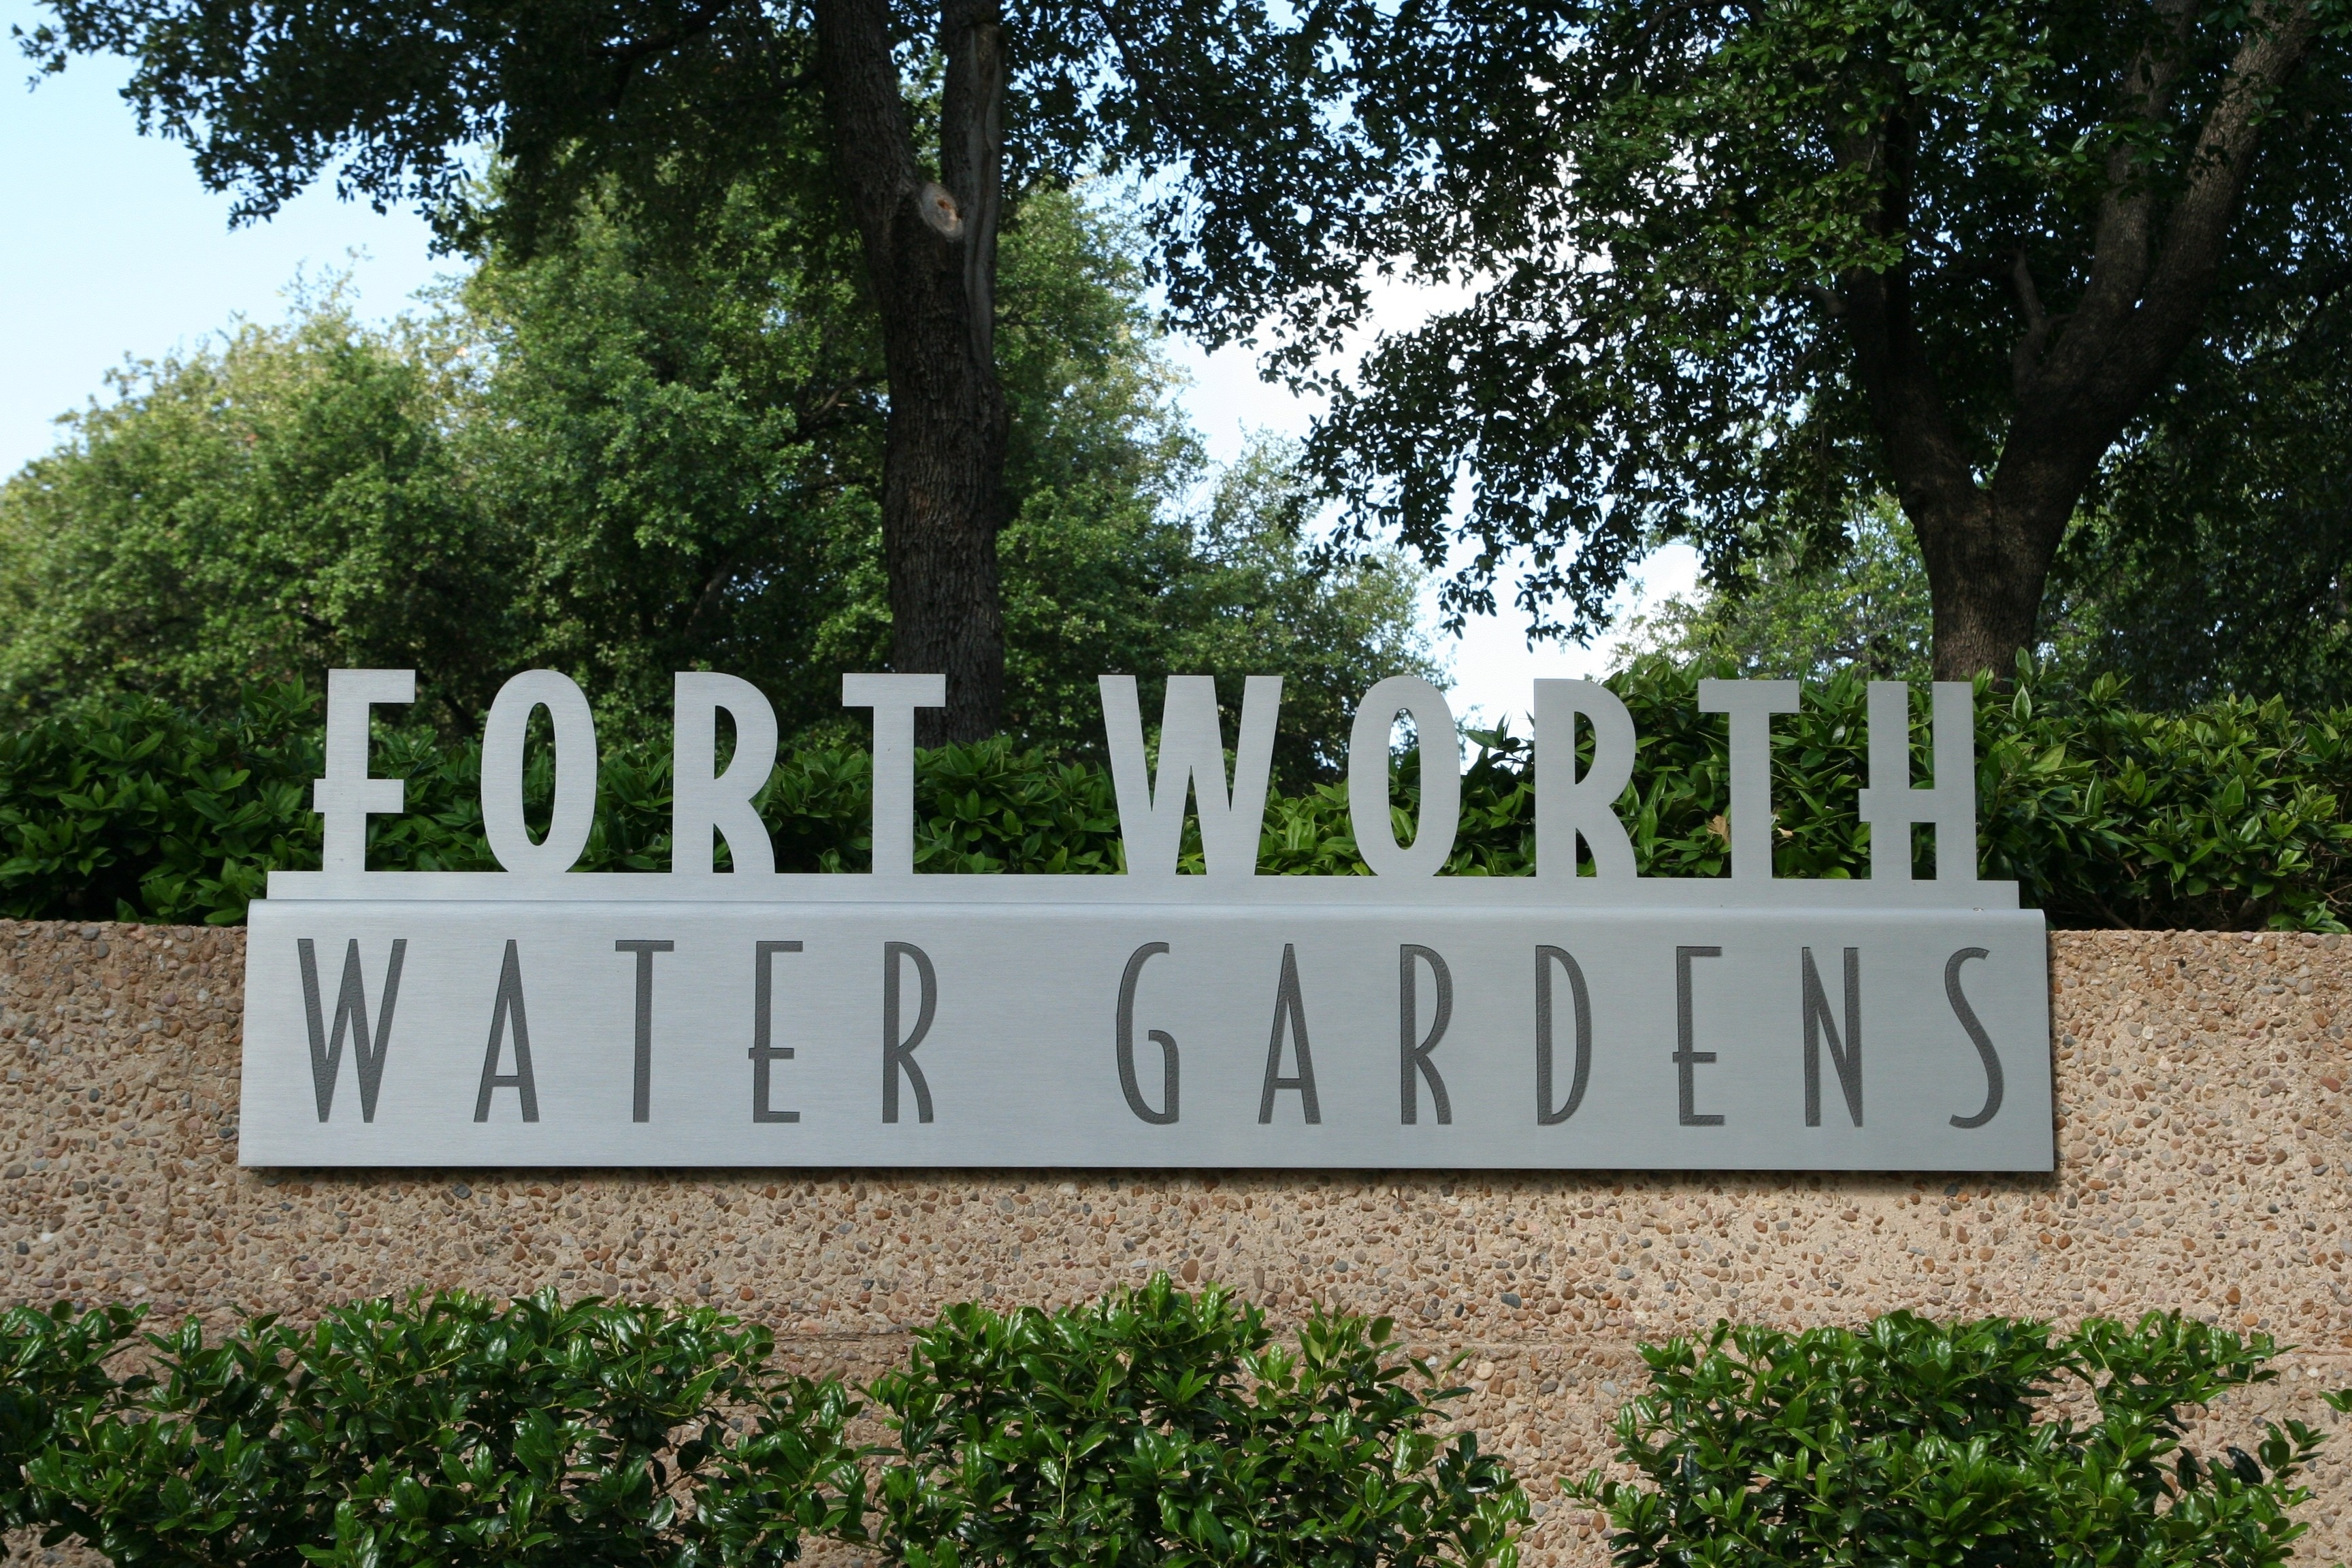 Fort Worth Water Gardens signage